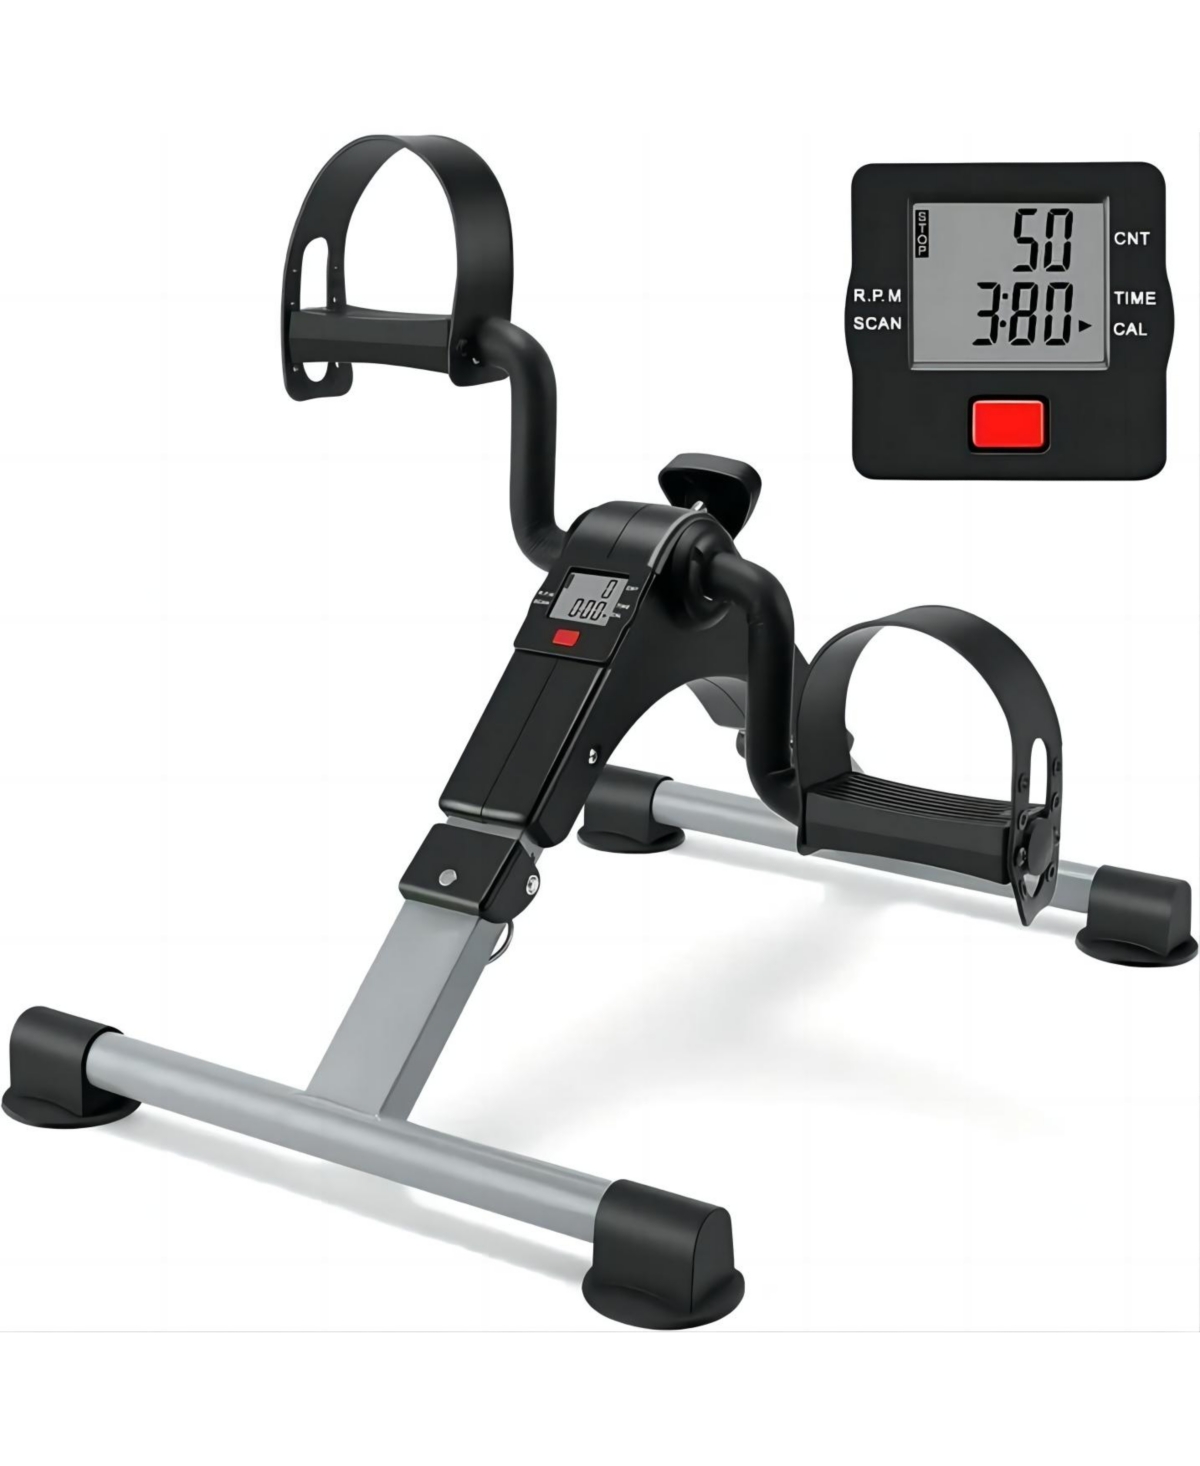 Portable Folding Bike Pedal Exerciser with Electronic Display, Mini Trainer Bikes - Black